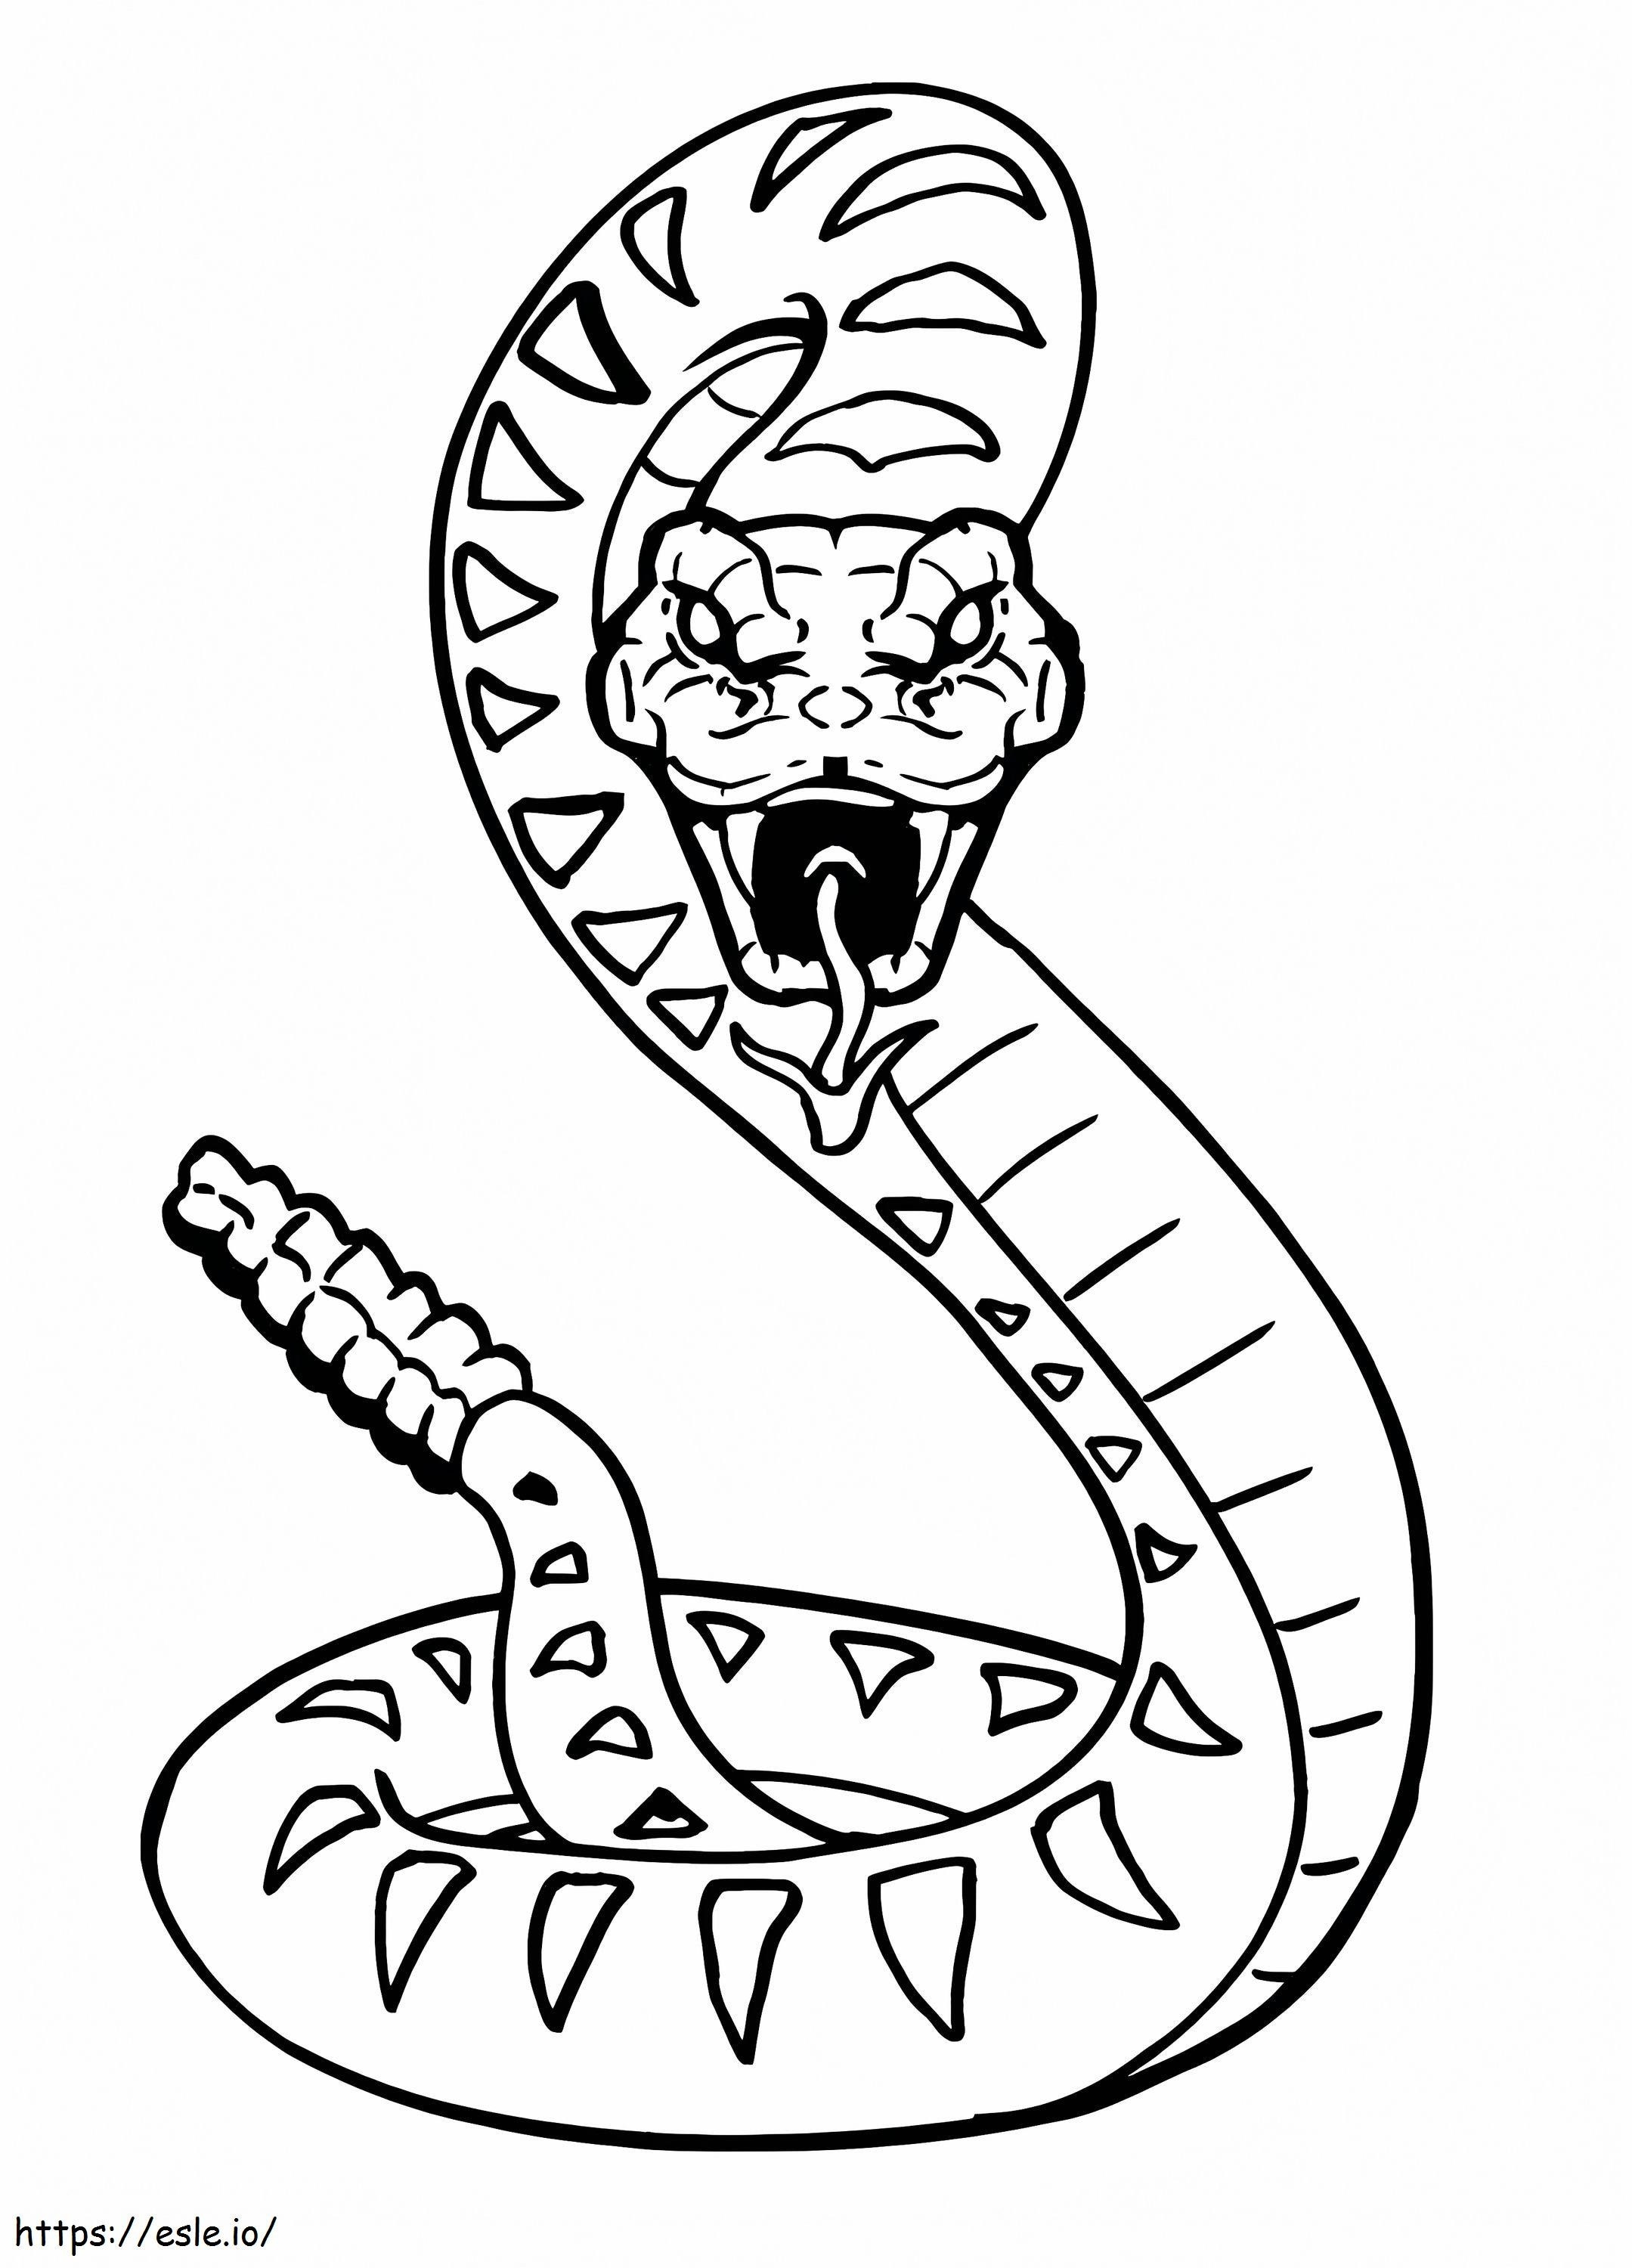 Snakes Snake Lego Ninjago coloring page